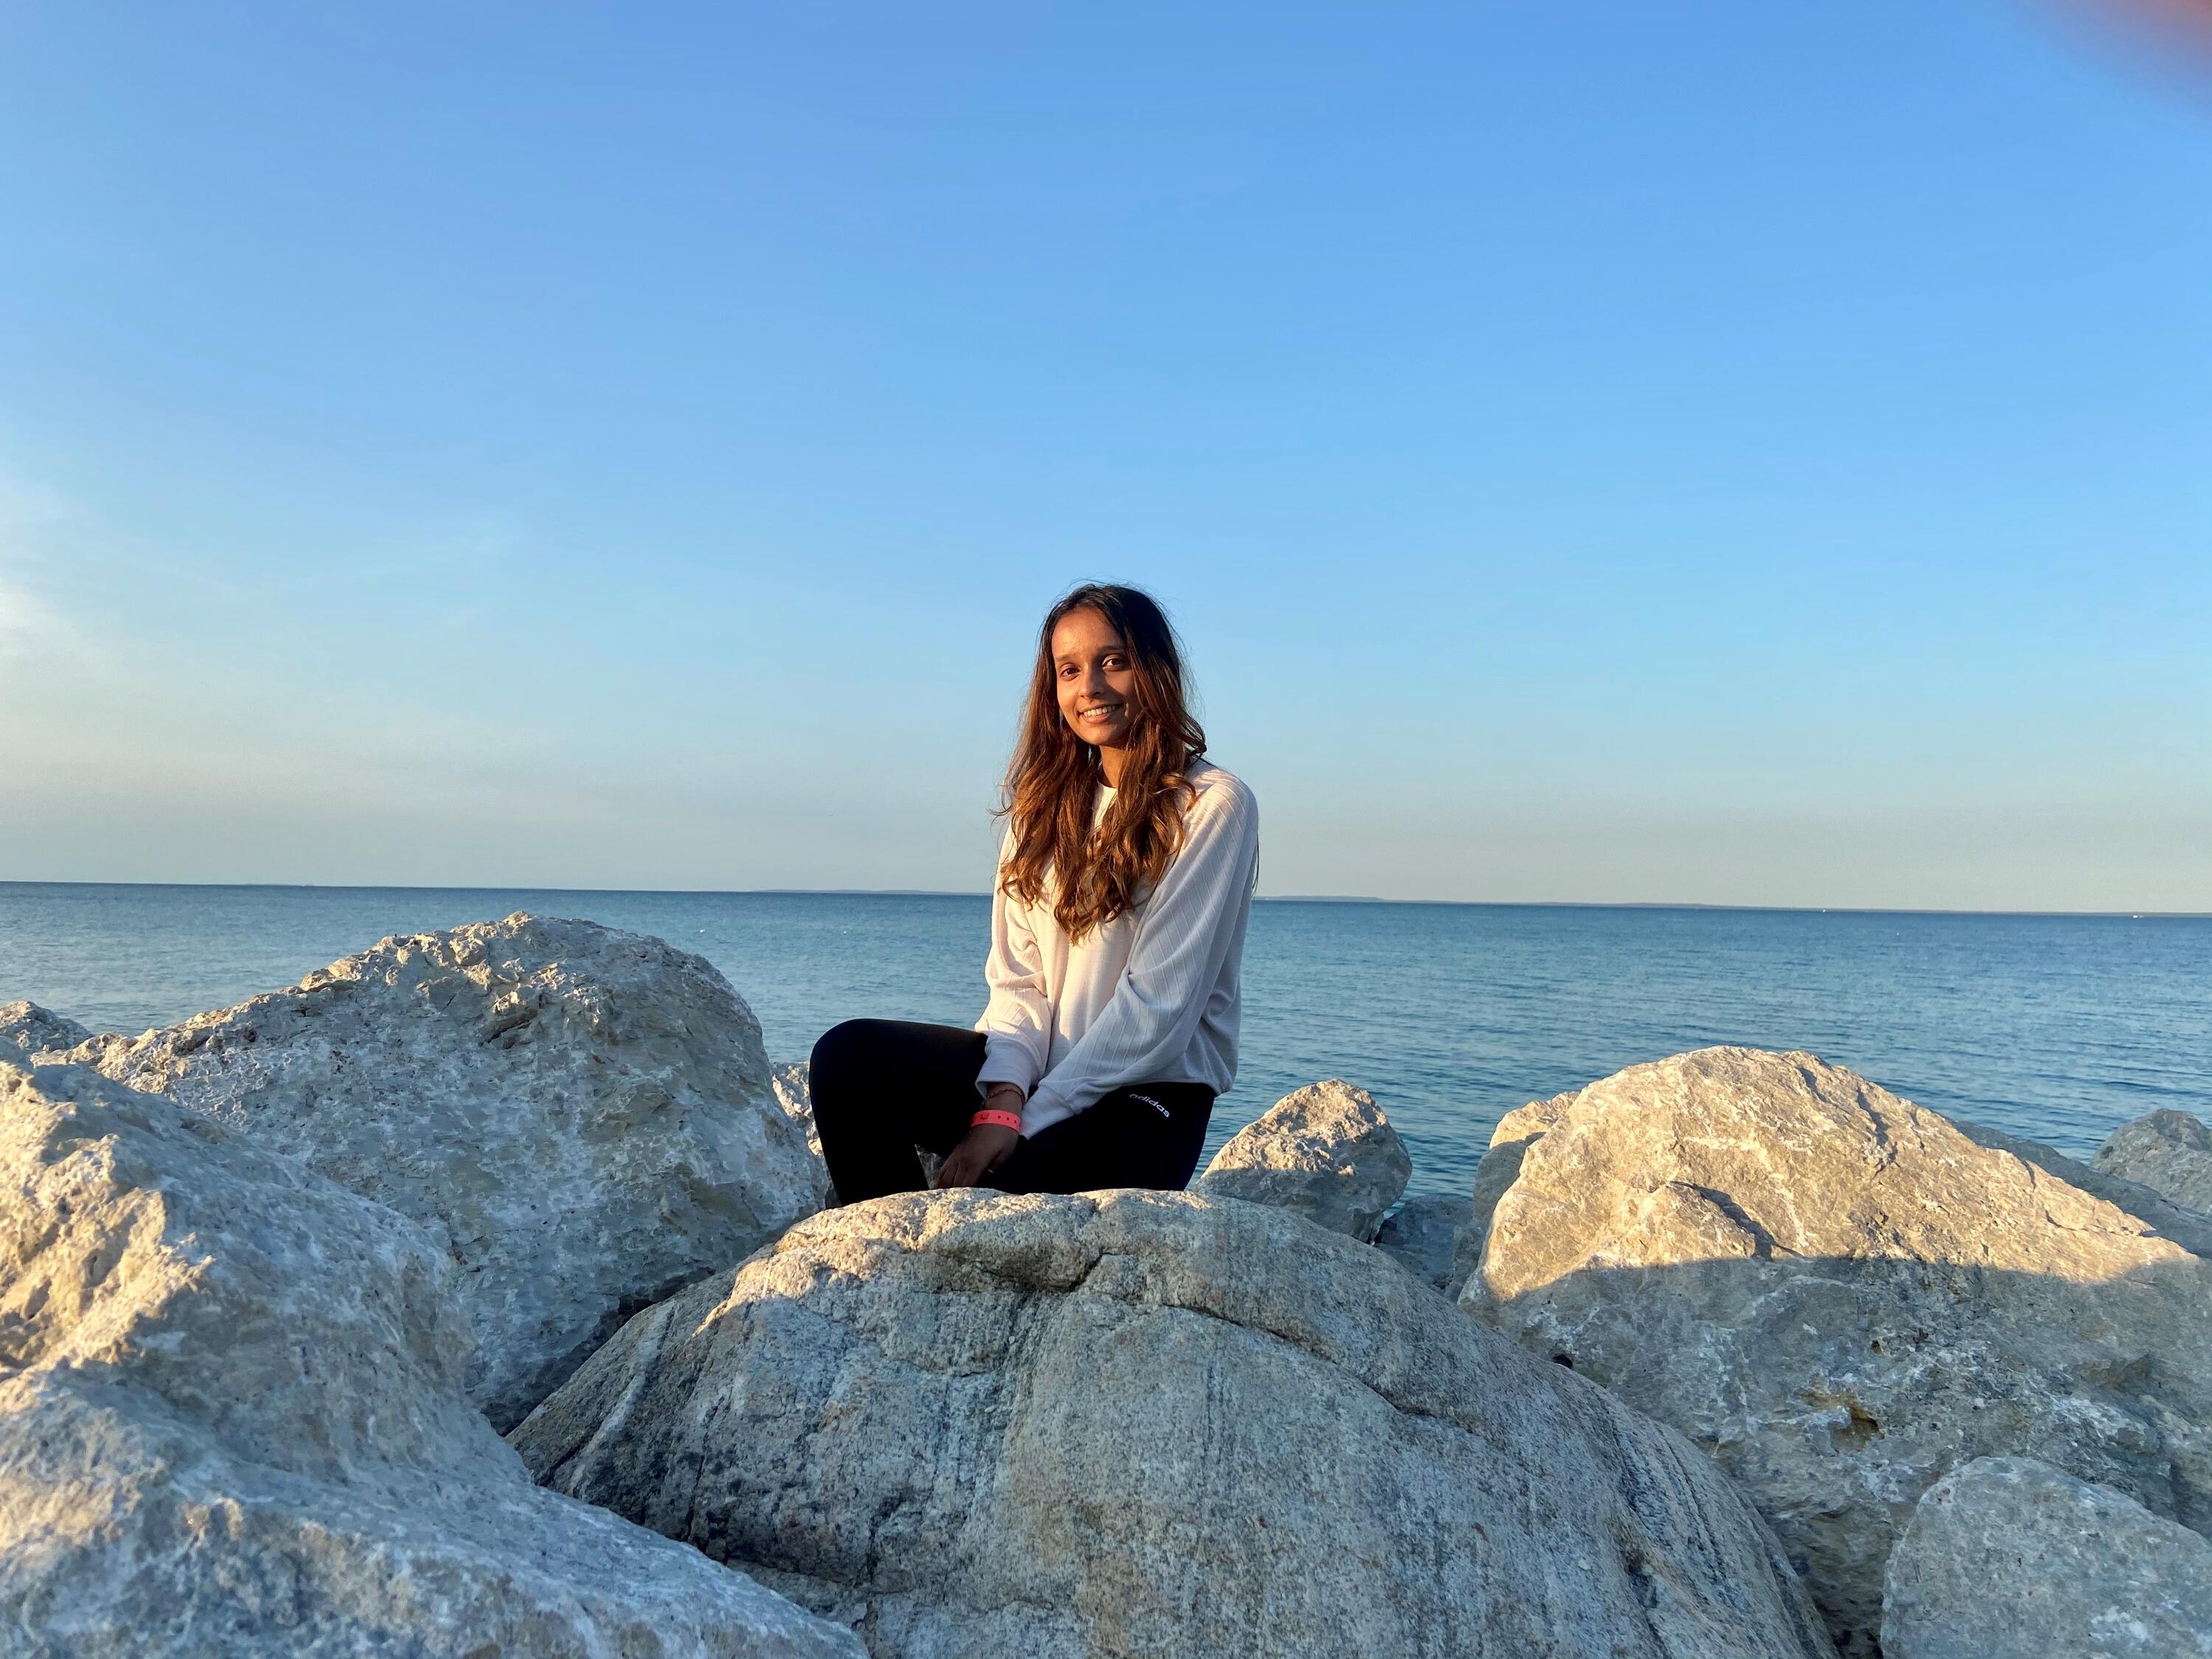 Charita sitting on a rock at a beach